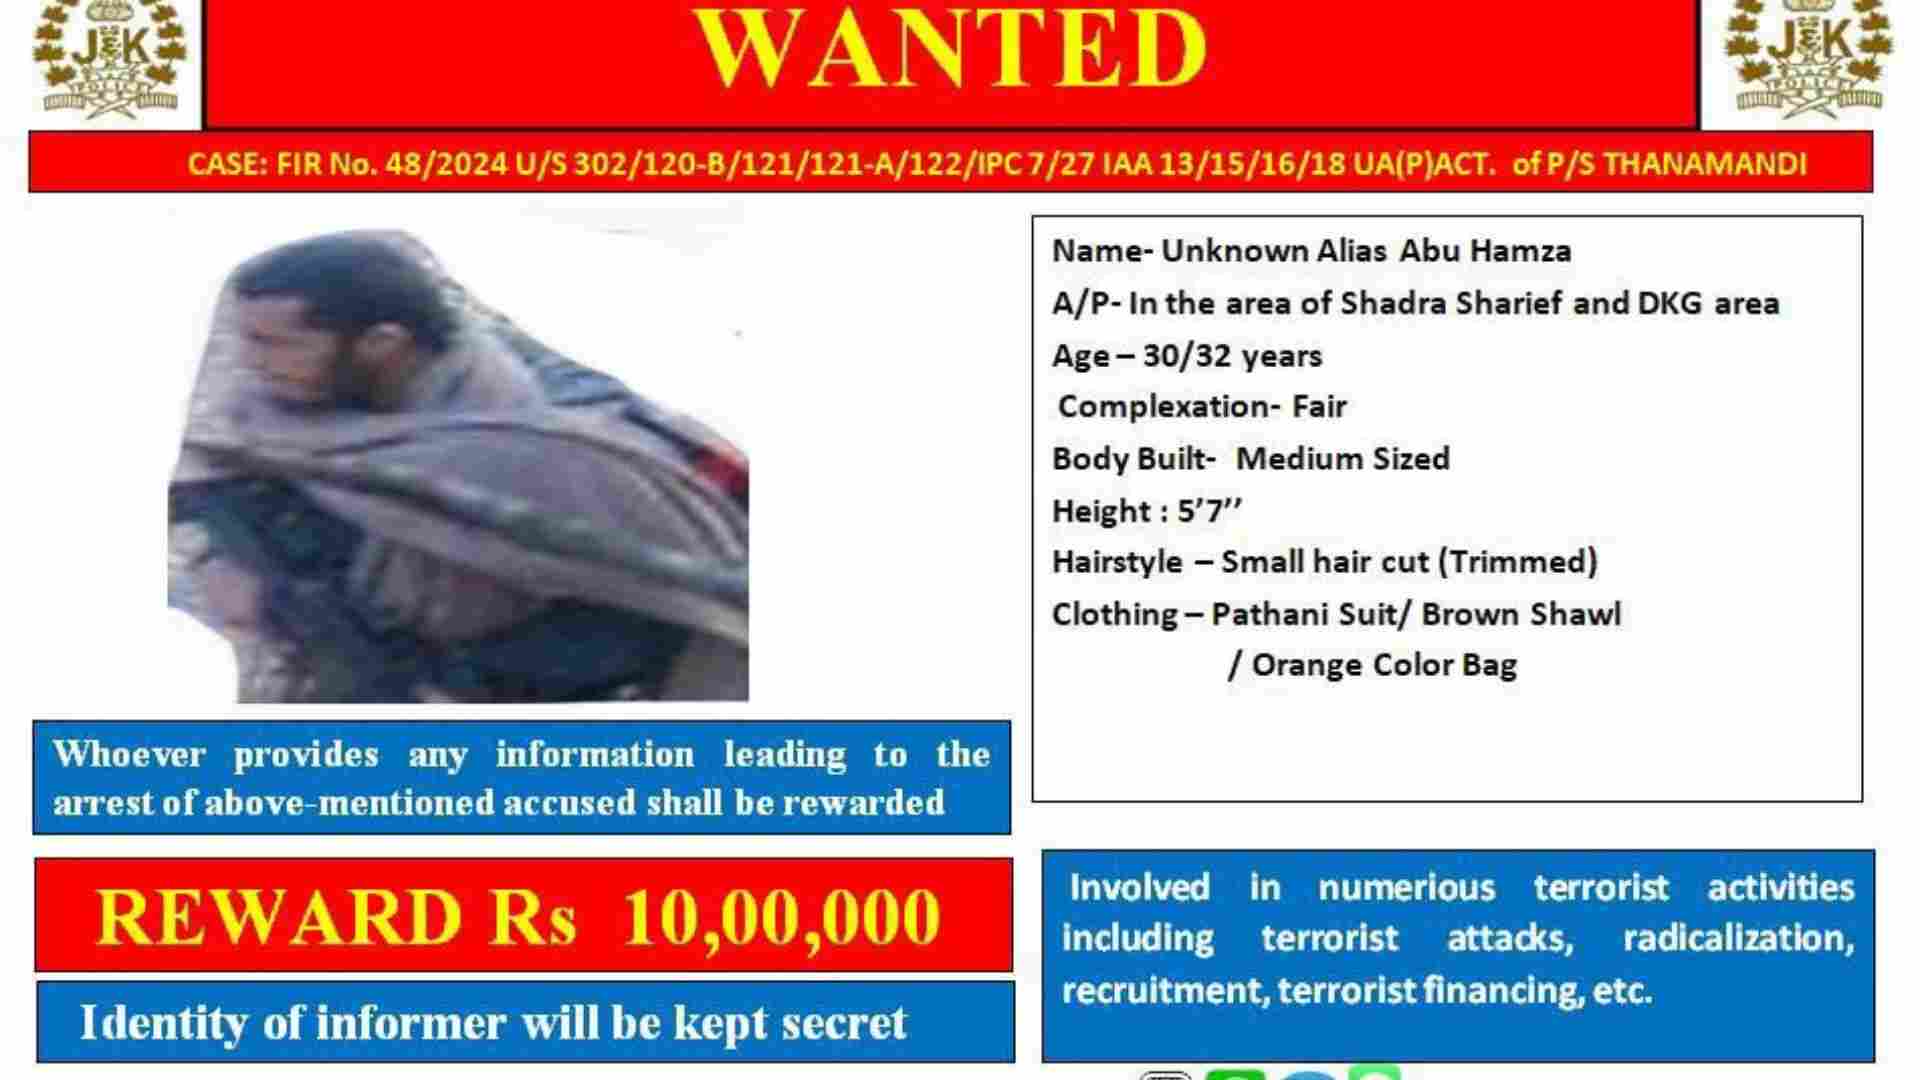 J&K Police Announces Rs 10 Lakh Reward for Information Leading to Capture of Terrorist in Rajouri Killing